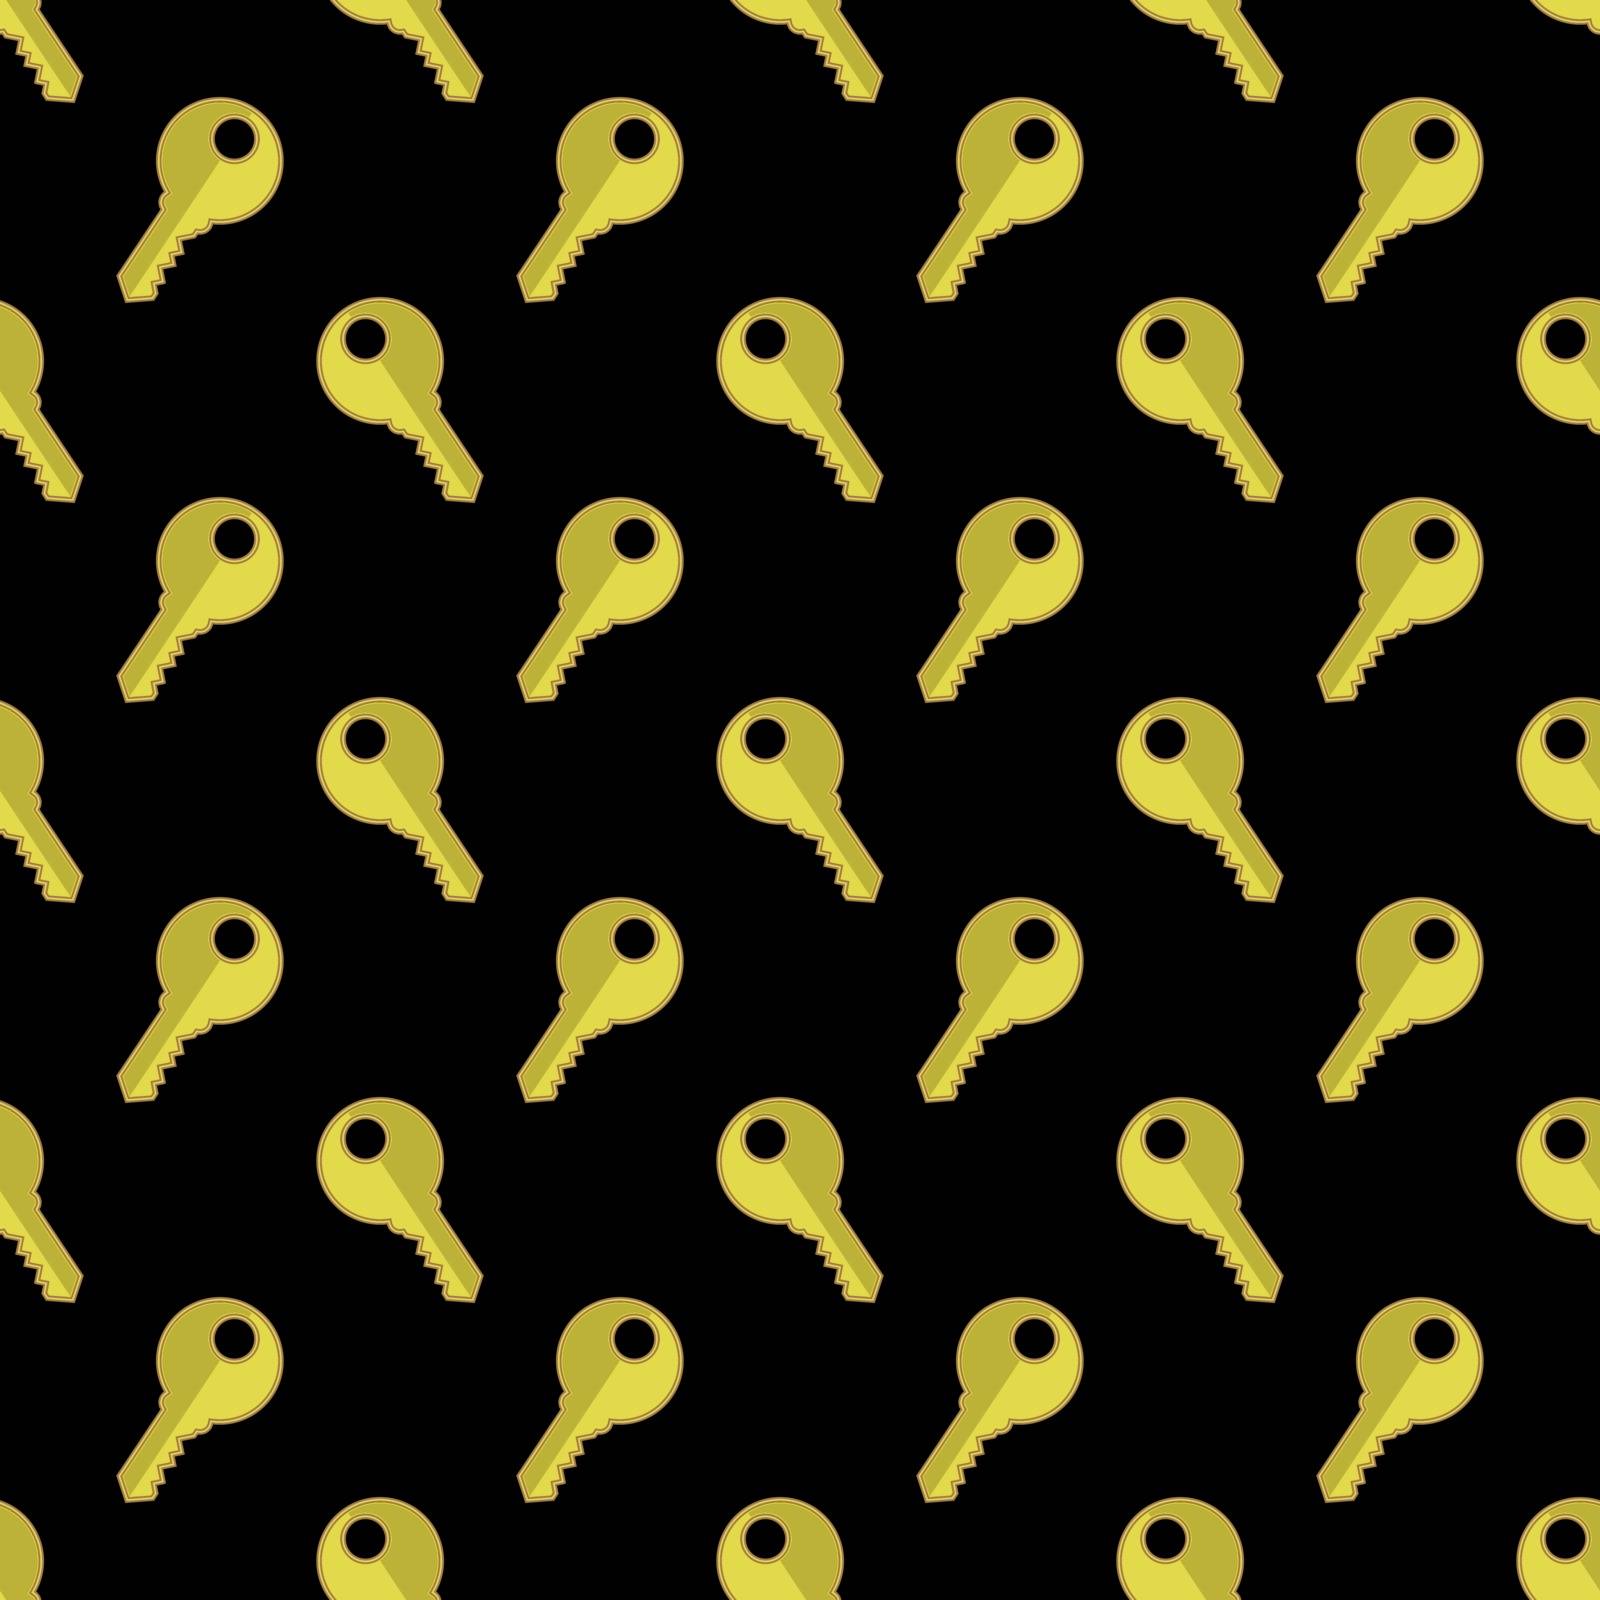 Yellow Keys Isolated on Black Background. Seamless Gold Key Pattern